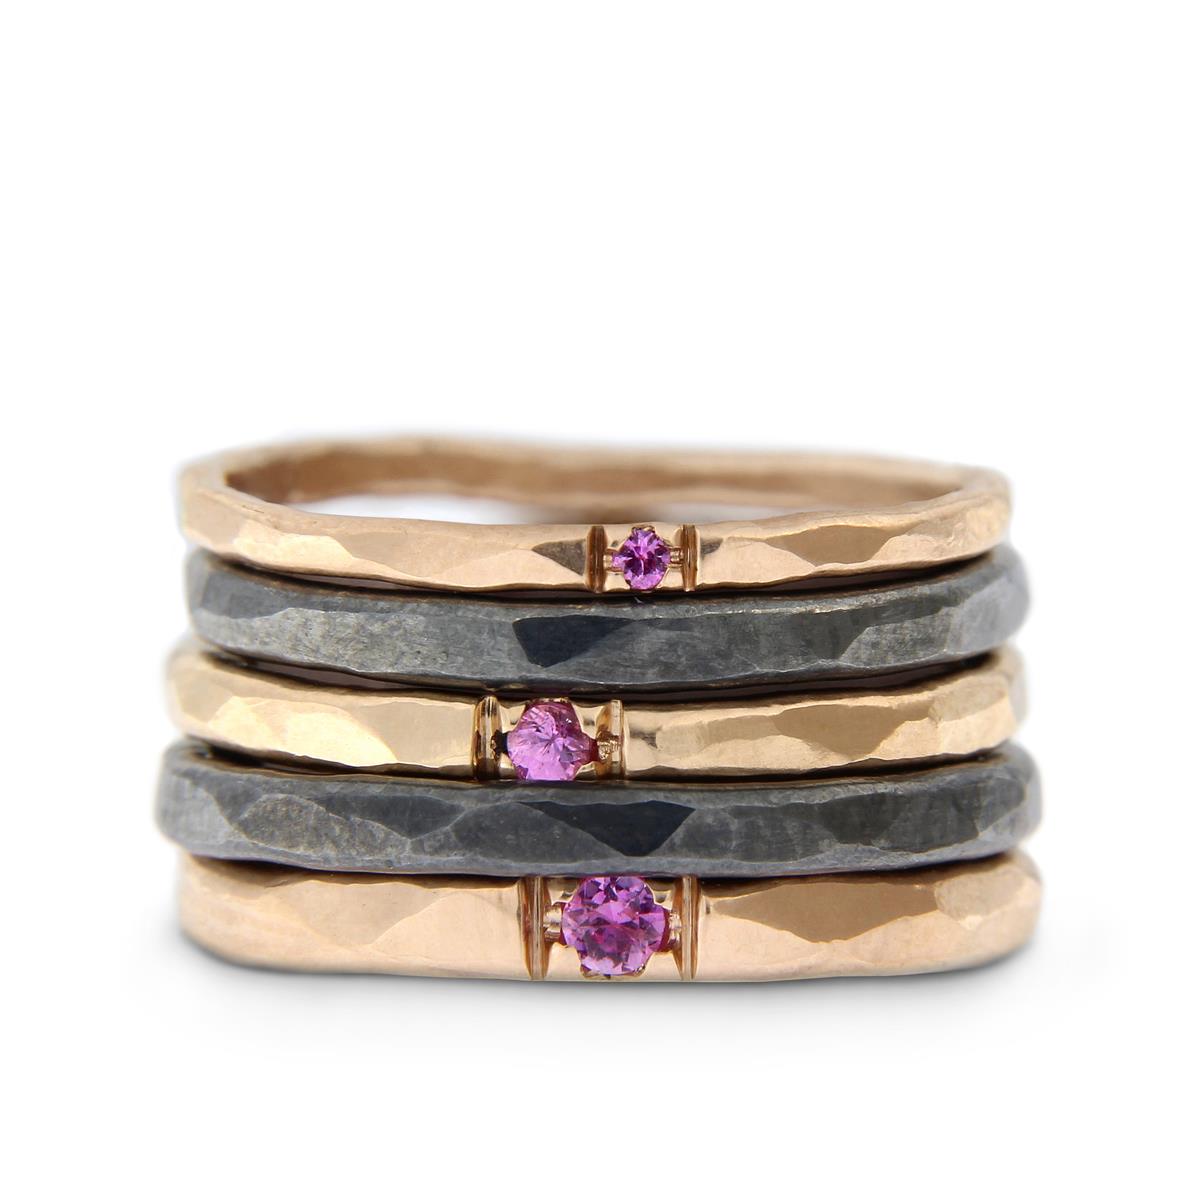 Katie g. Jewellery_Stack - Hammered Rings in 1,5 bis 2,5mm in oxidiertem Sterling silber und 14kt. Roségold mit rosa Saphir